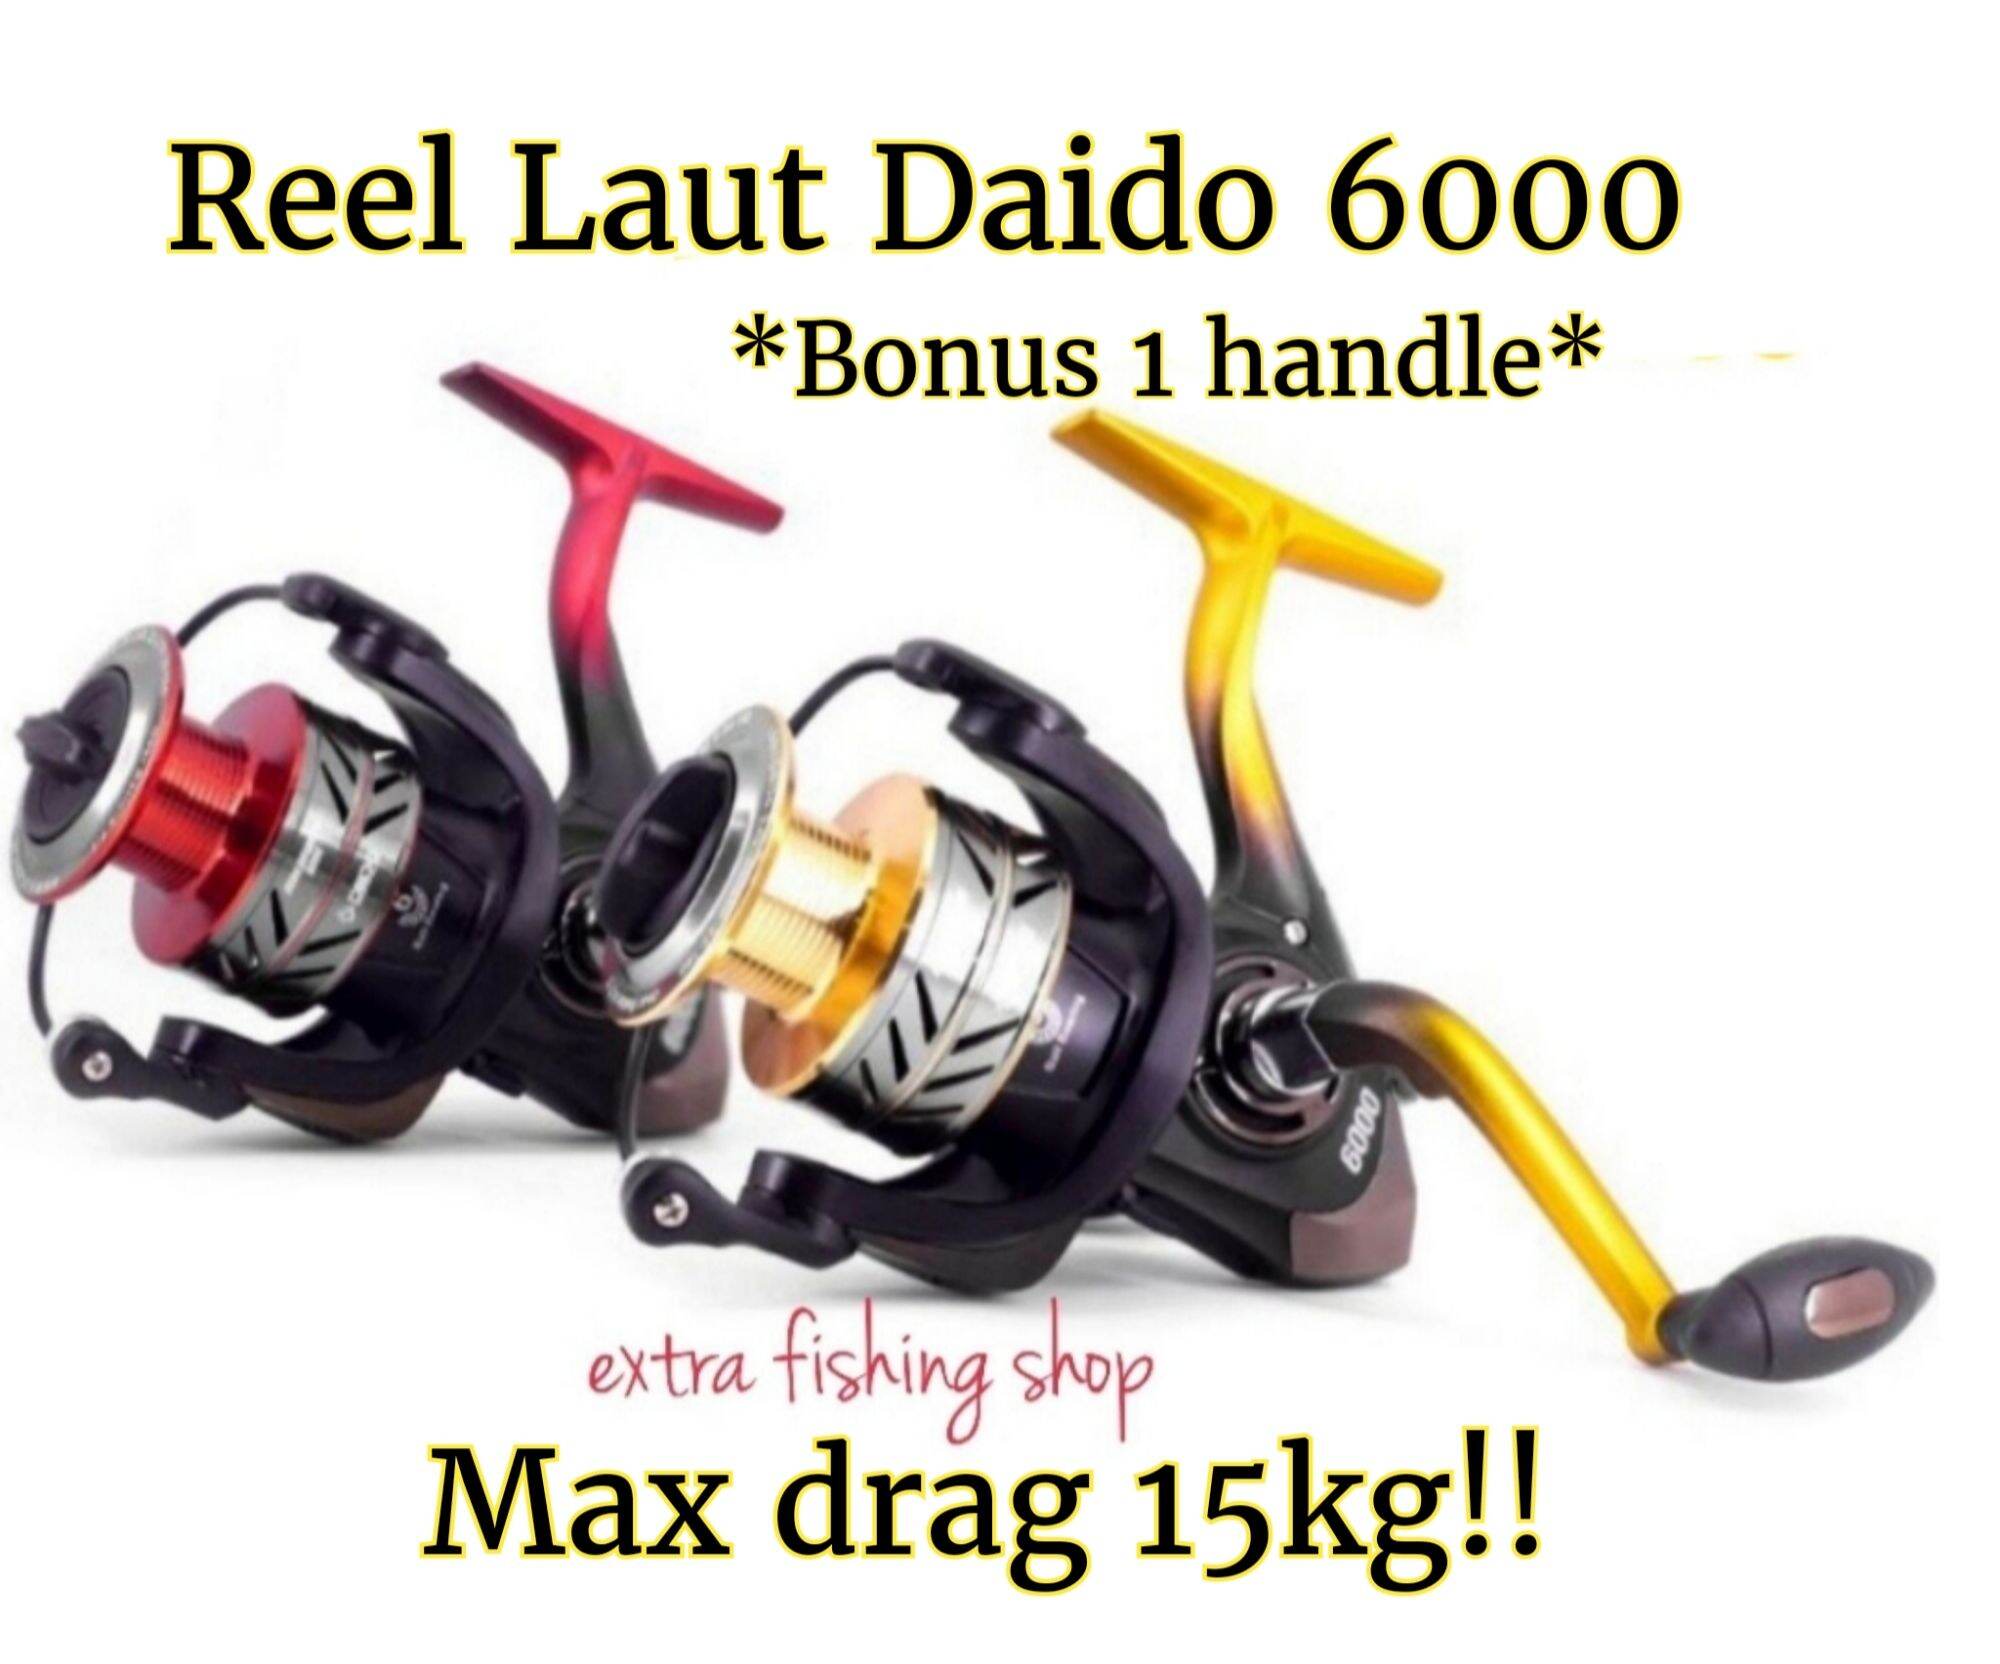 Reel Laut Daido 6000 Max Drag 15kg Bonus 1 Handle